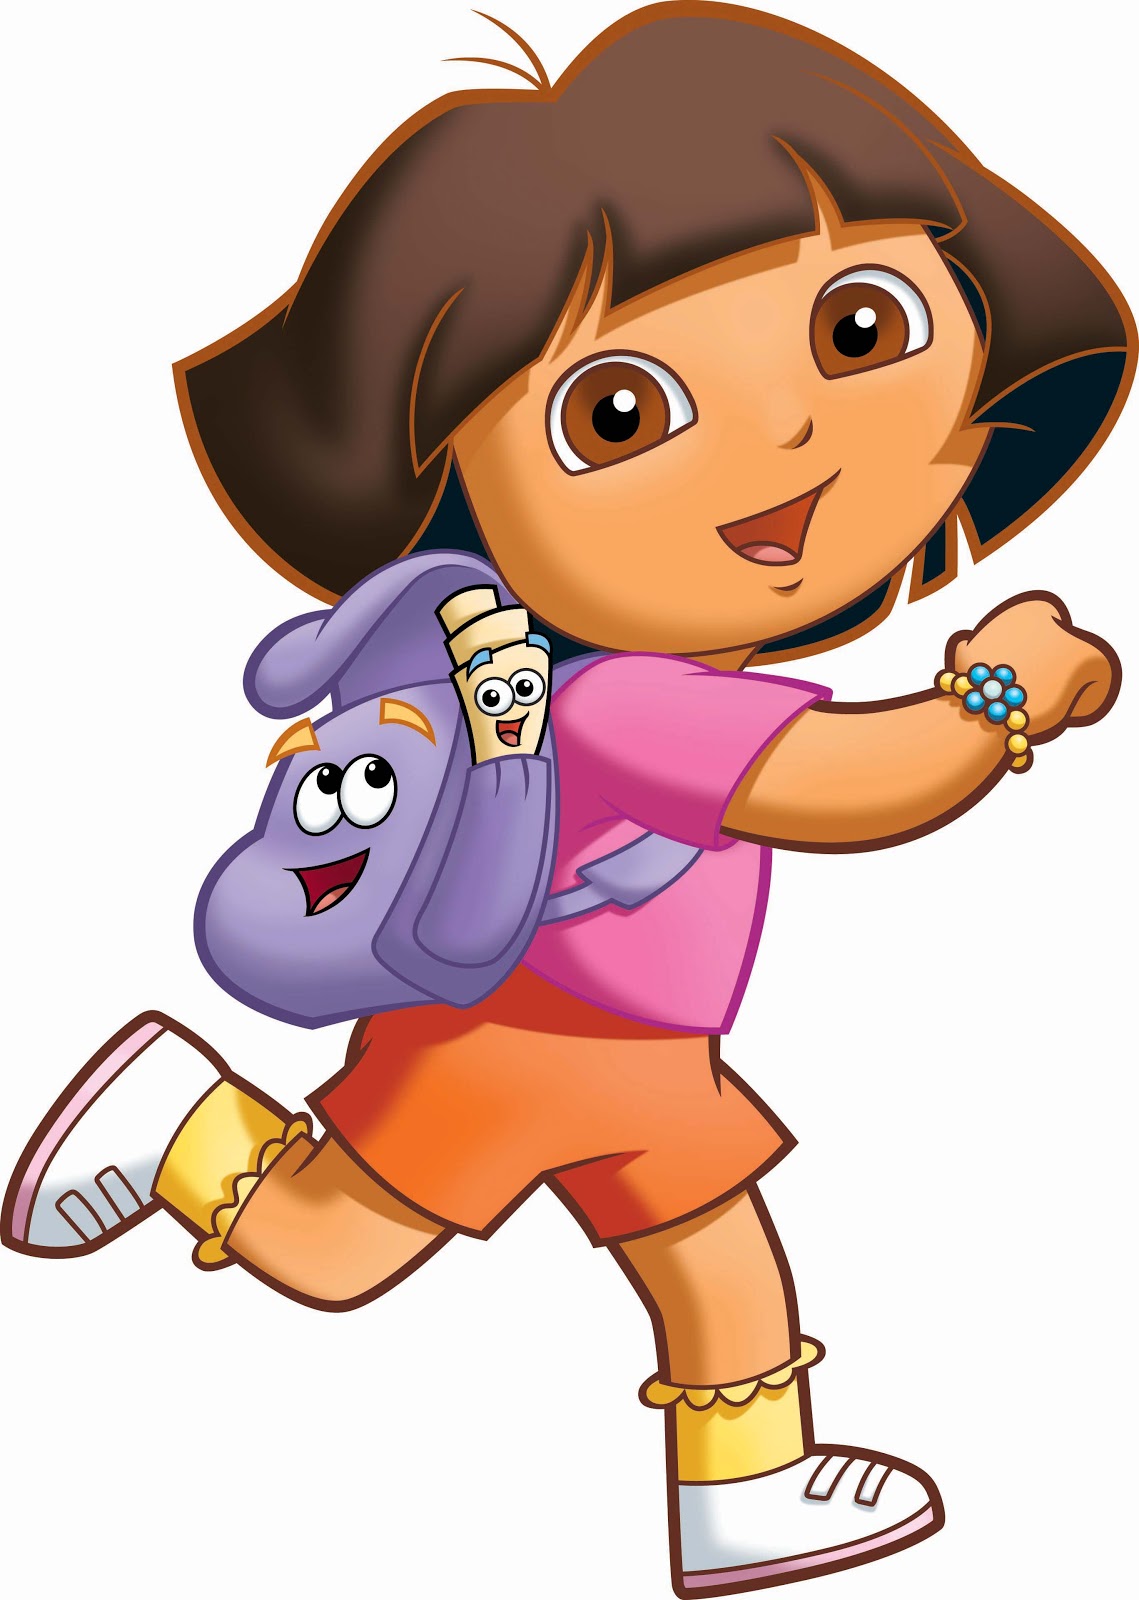 Pix For > Dora The Explorer And Friends